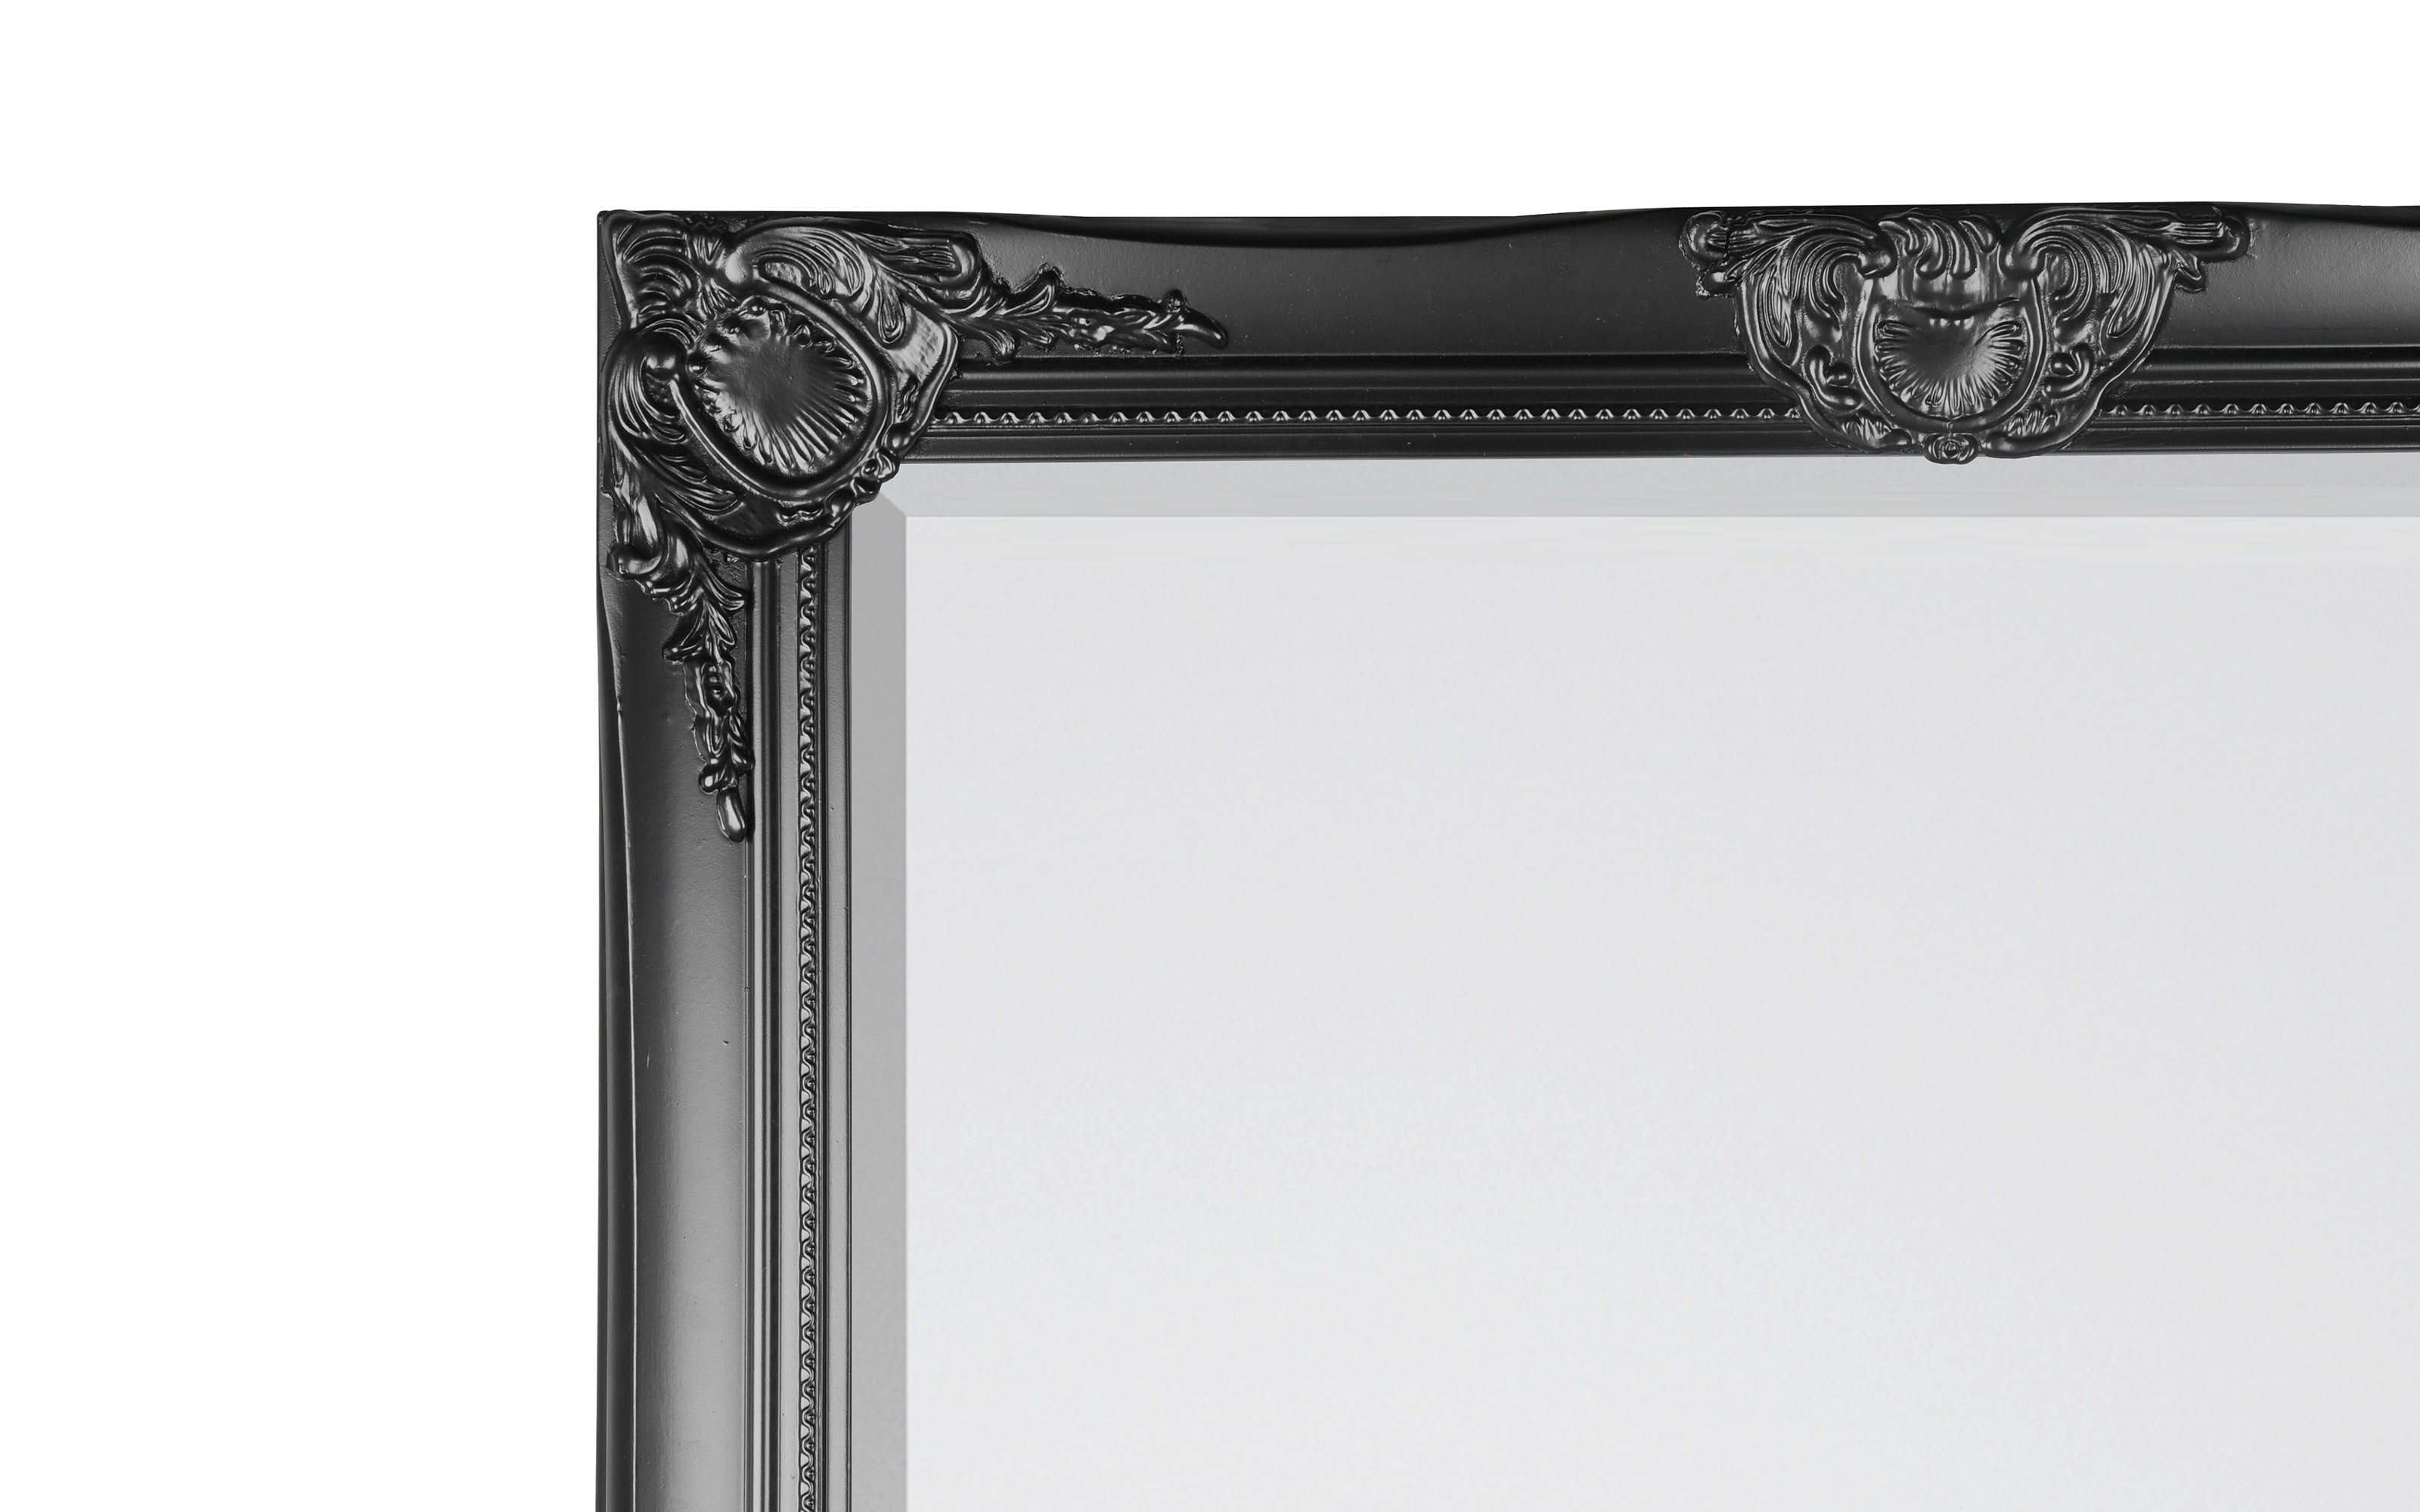 Rahmenspiegel Elsa, schwarz, 70 x 170 cm